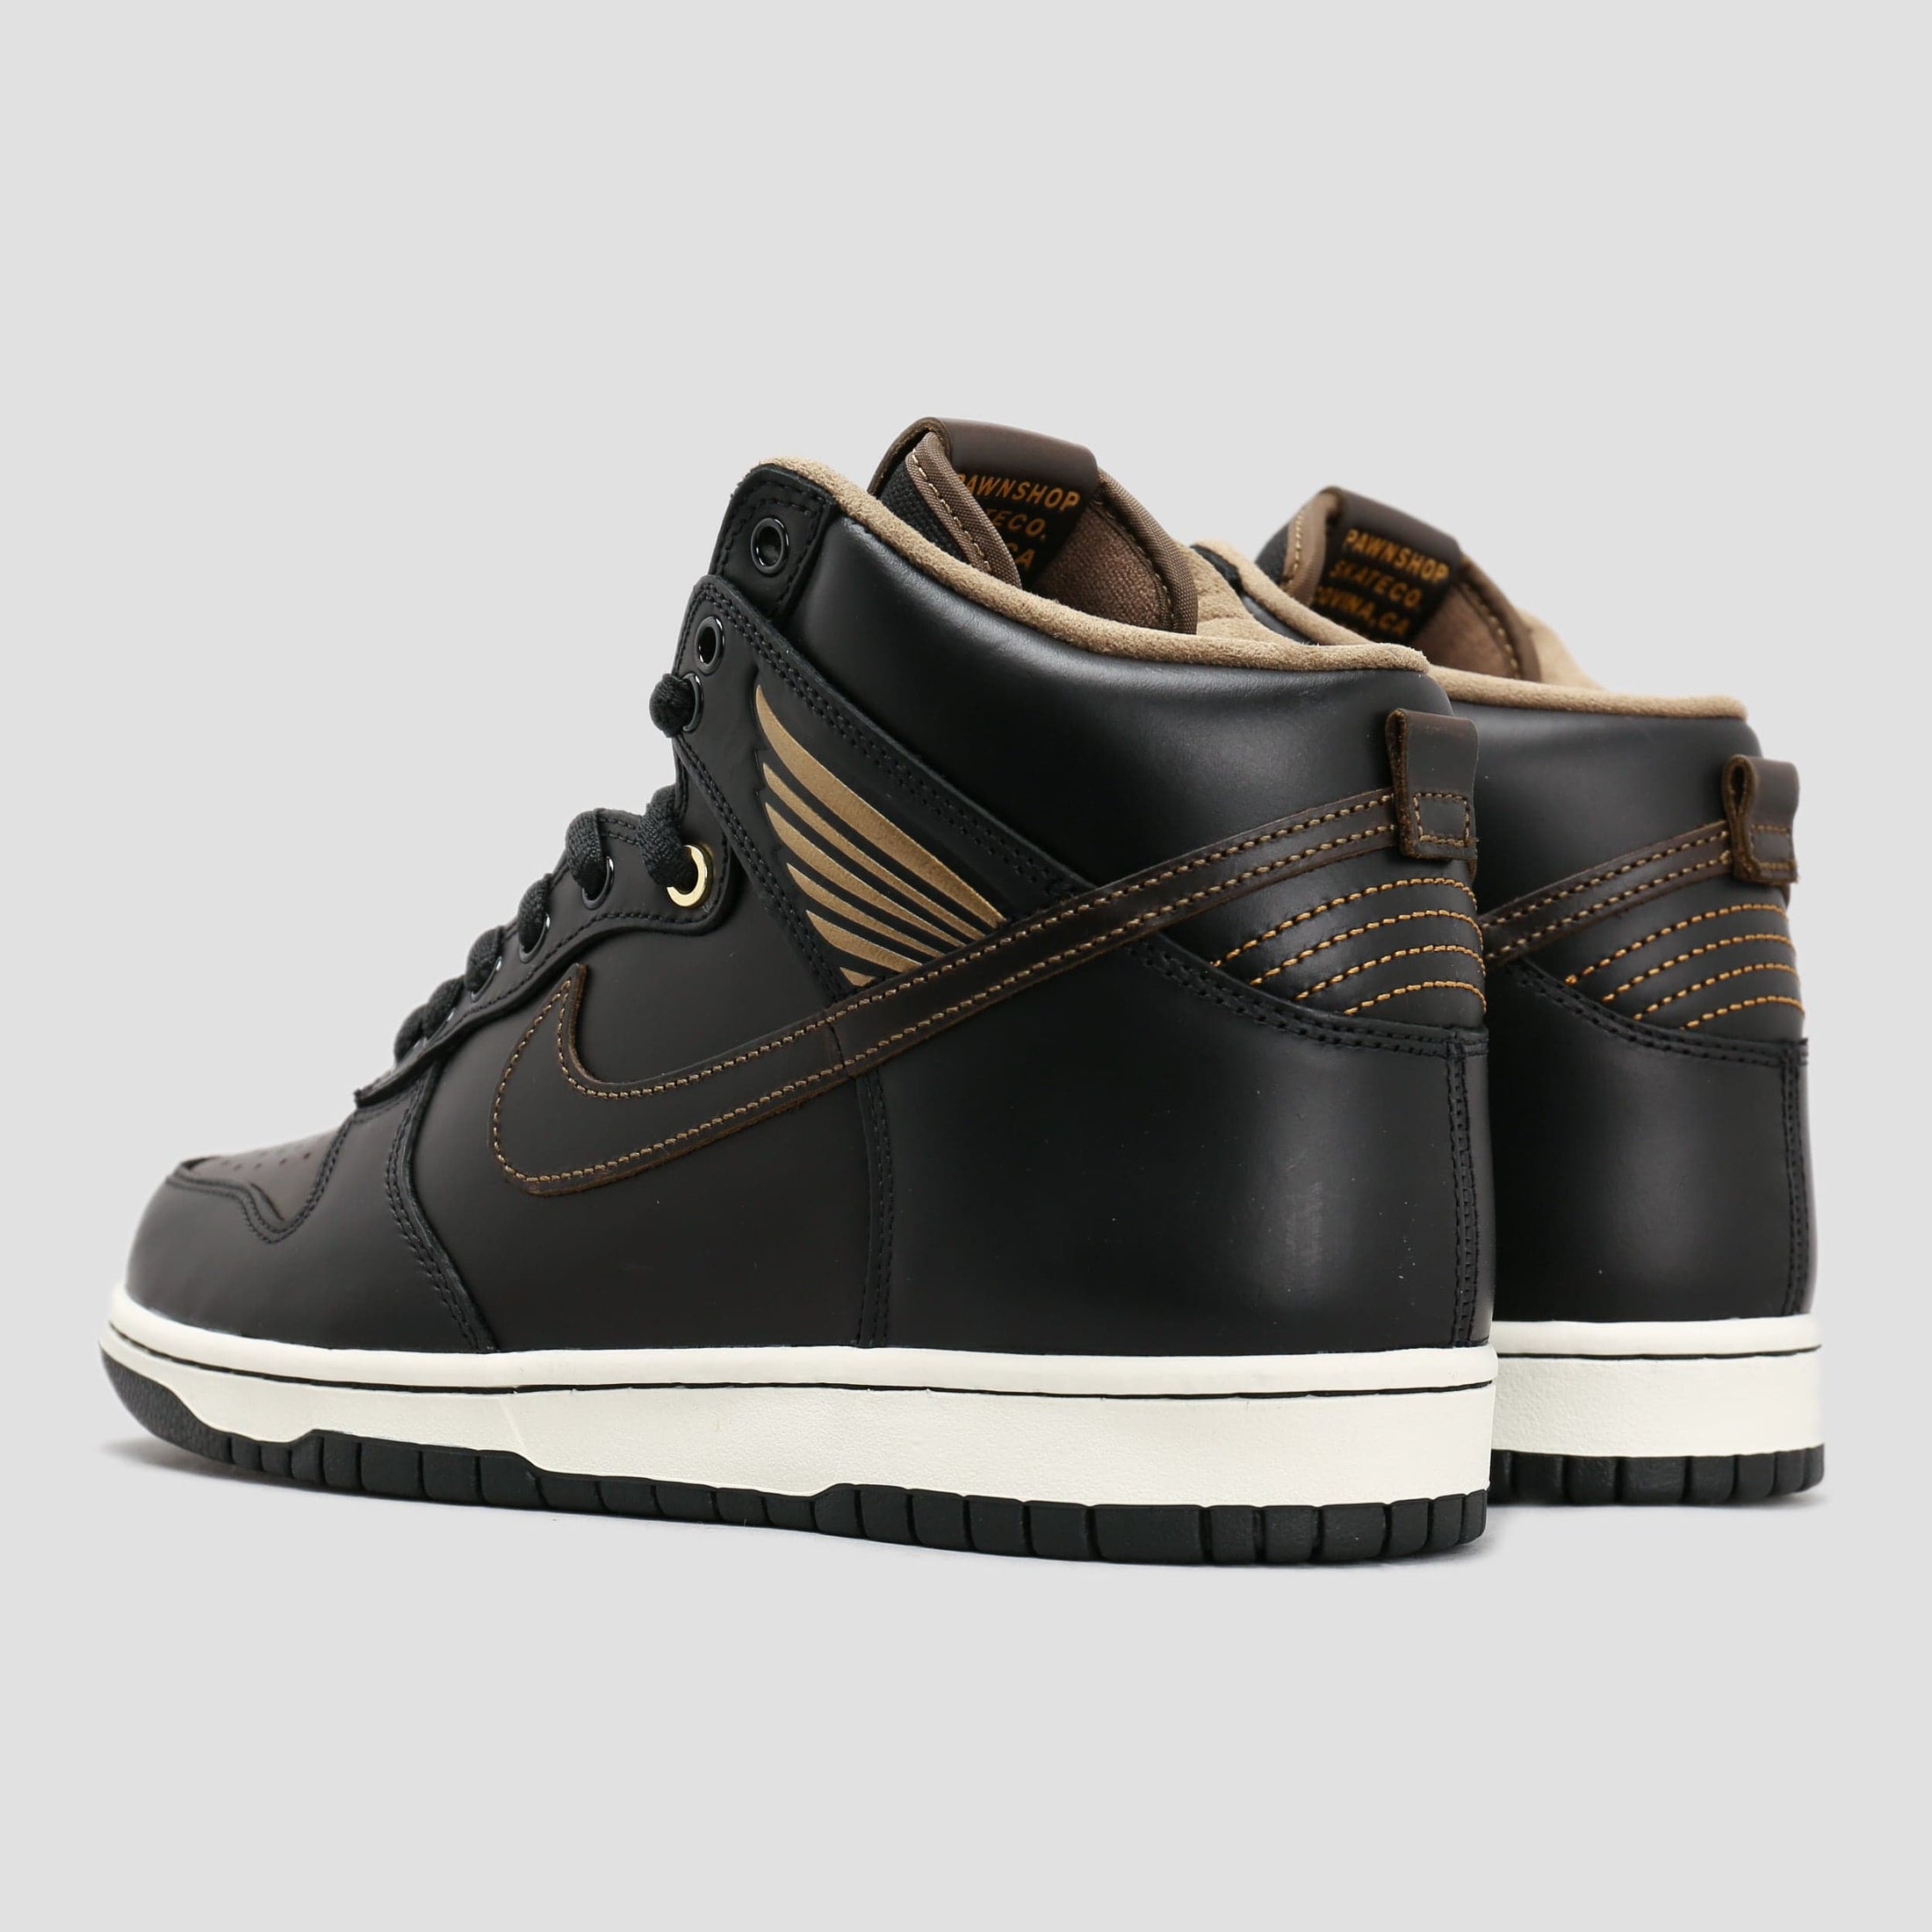 Nike SB Dunk High OG QS Shoes Black / Black - Metallic Gold